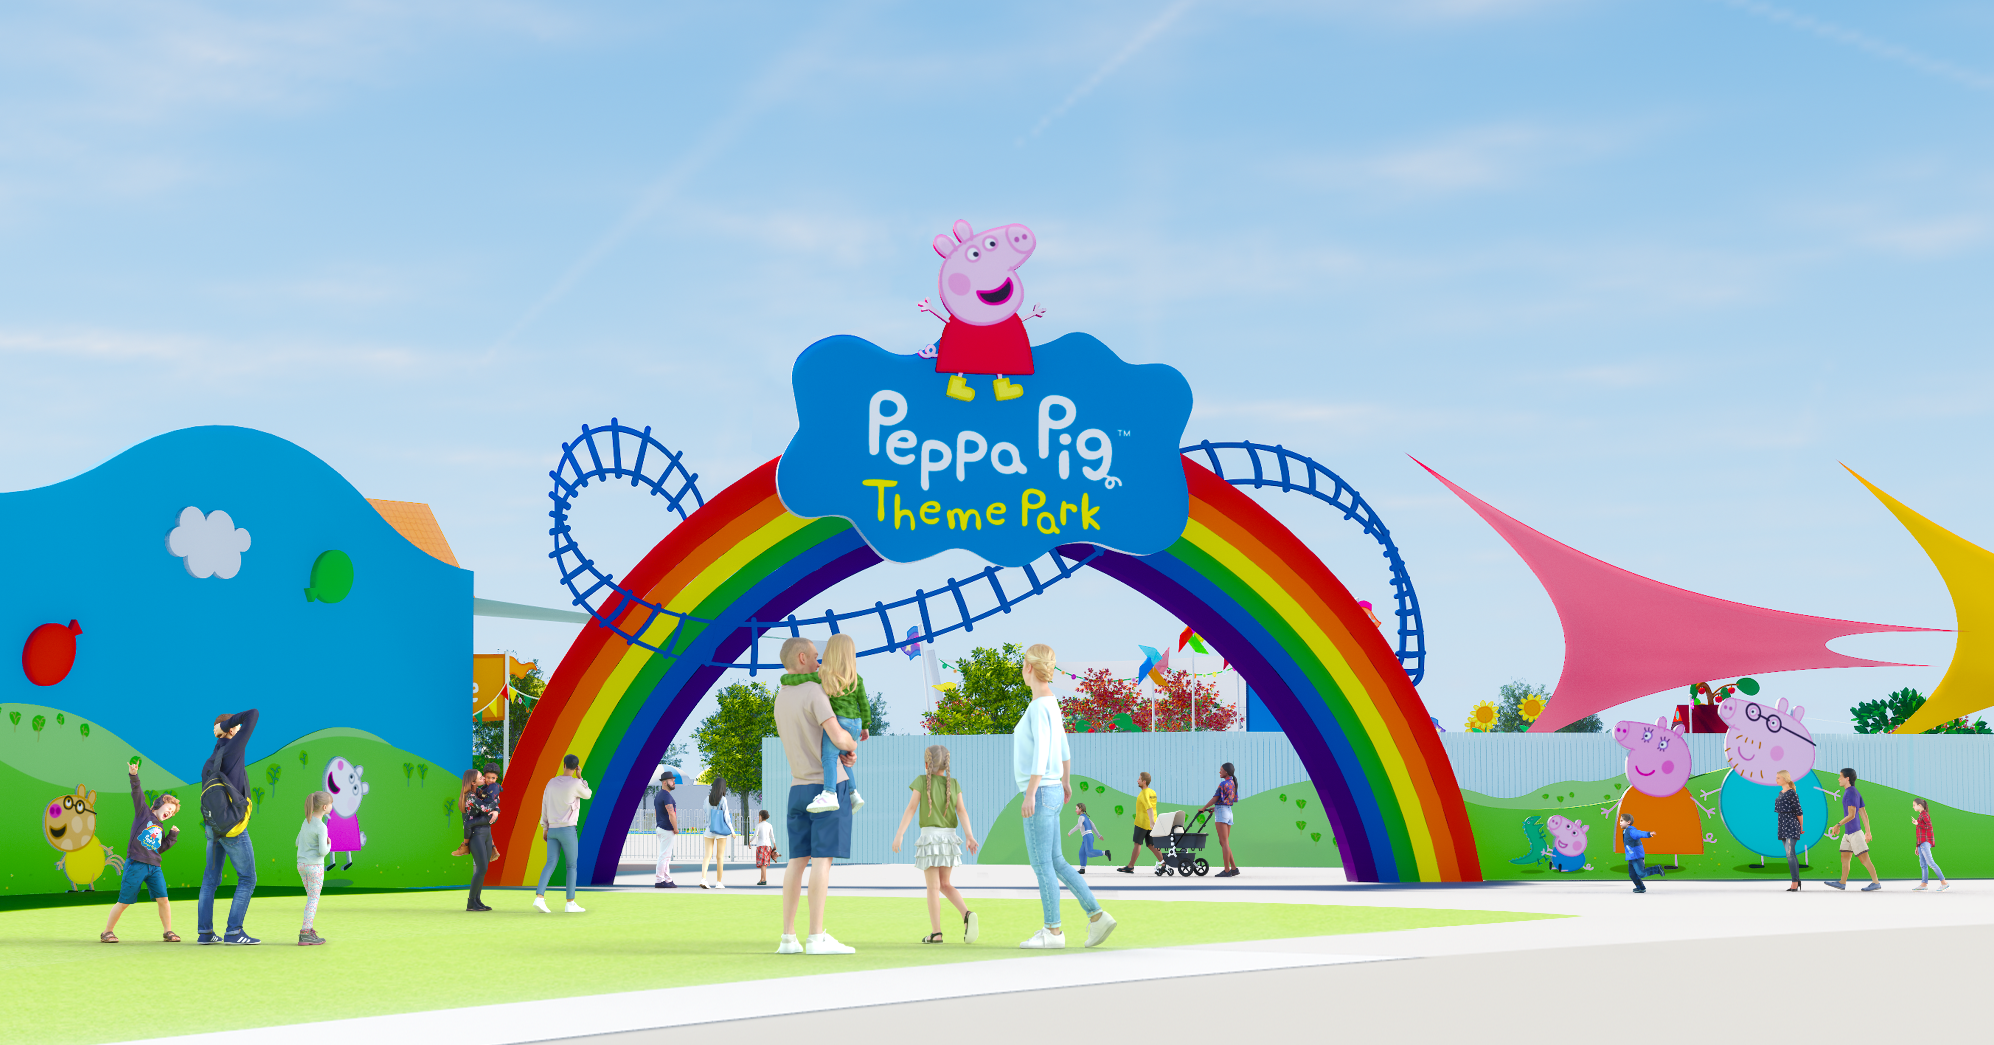 Peppa Pig Theme Park, Merlin